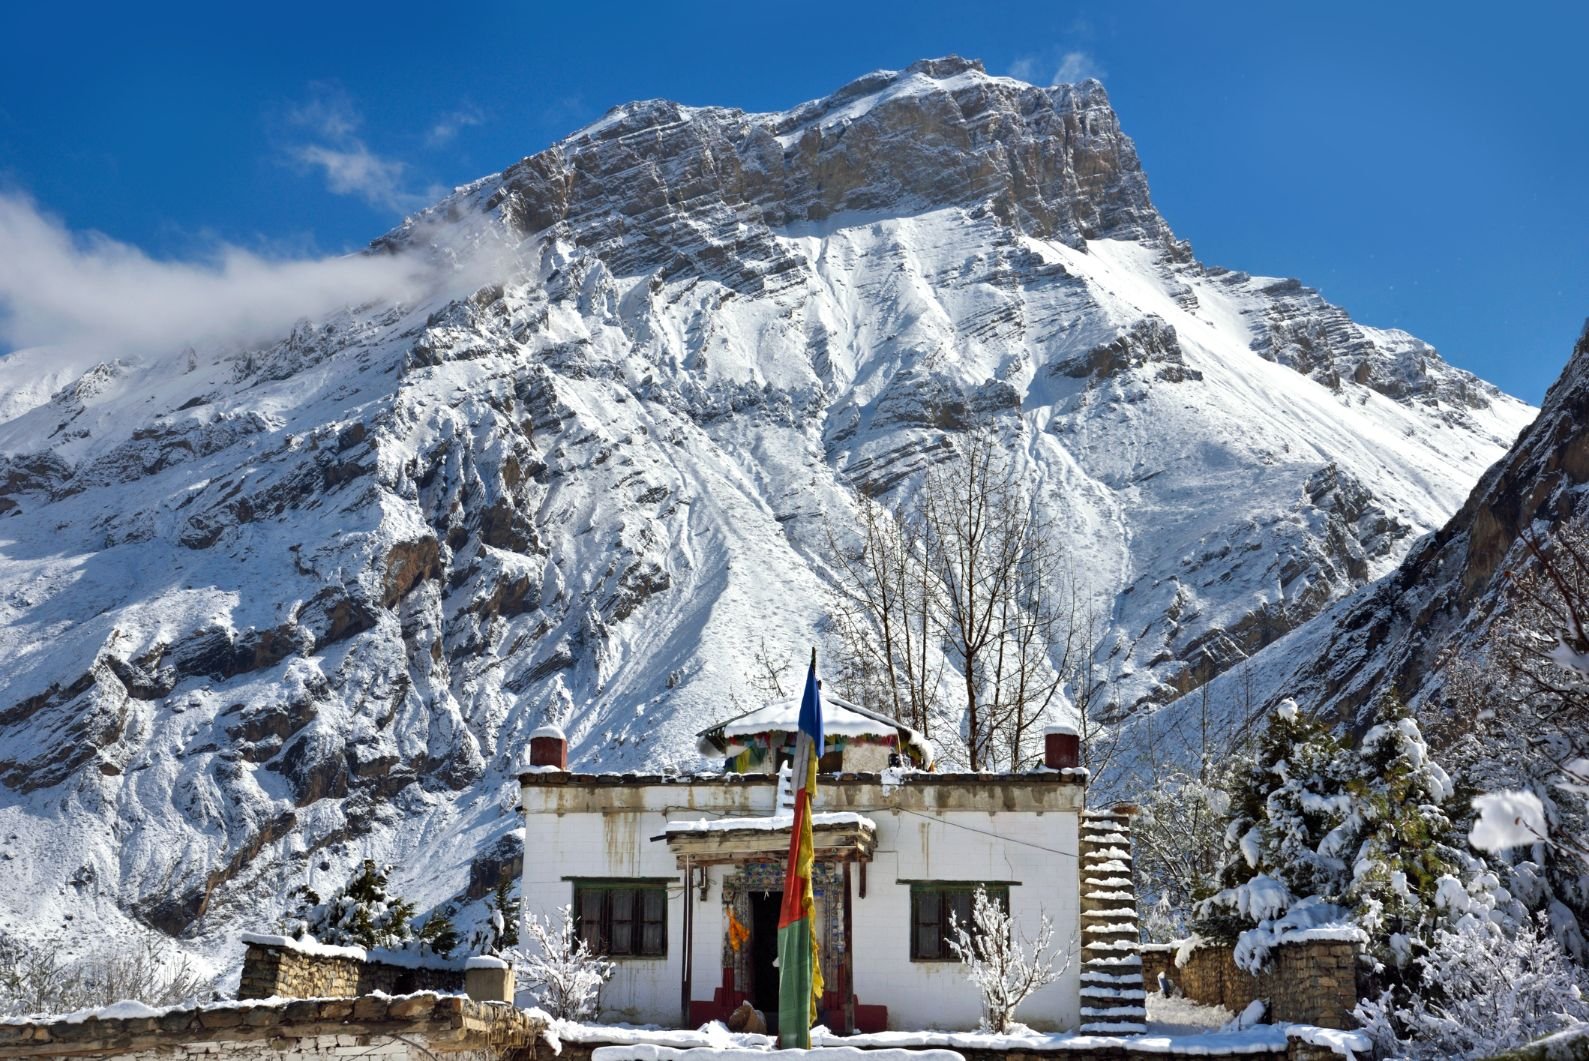  Buddhist Prayer Flags and a snow stupa along the Annapurna circuit.